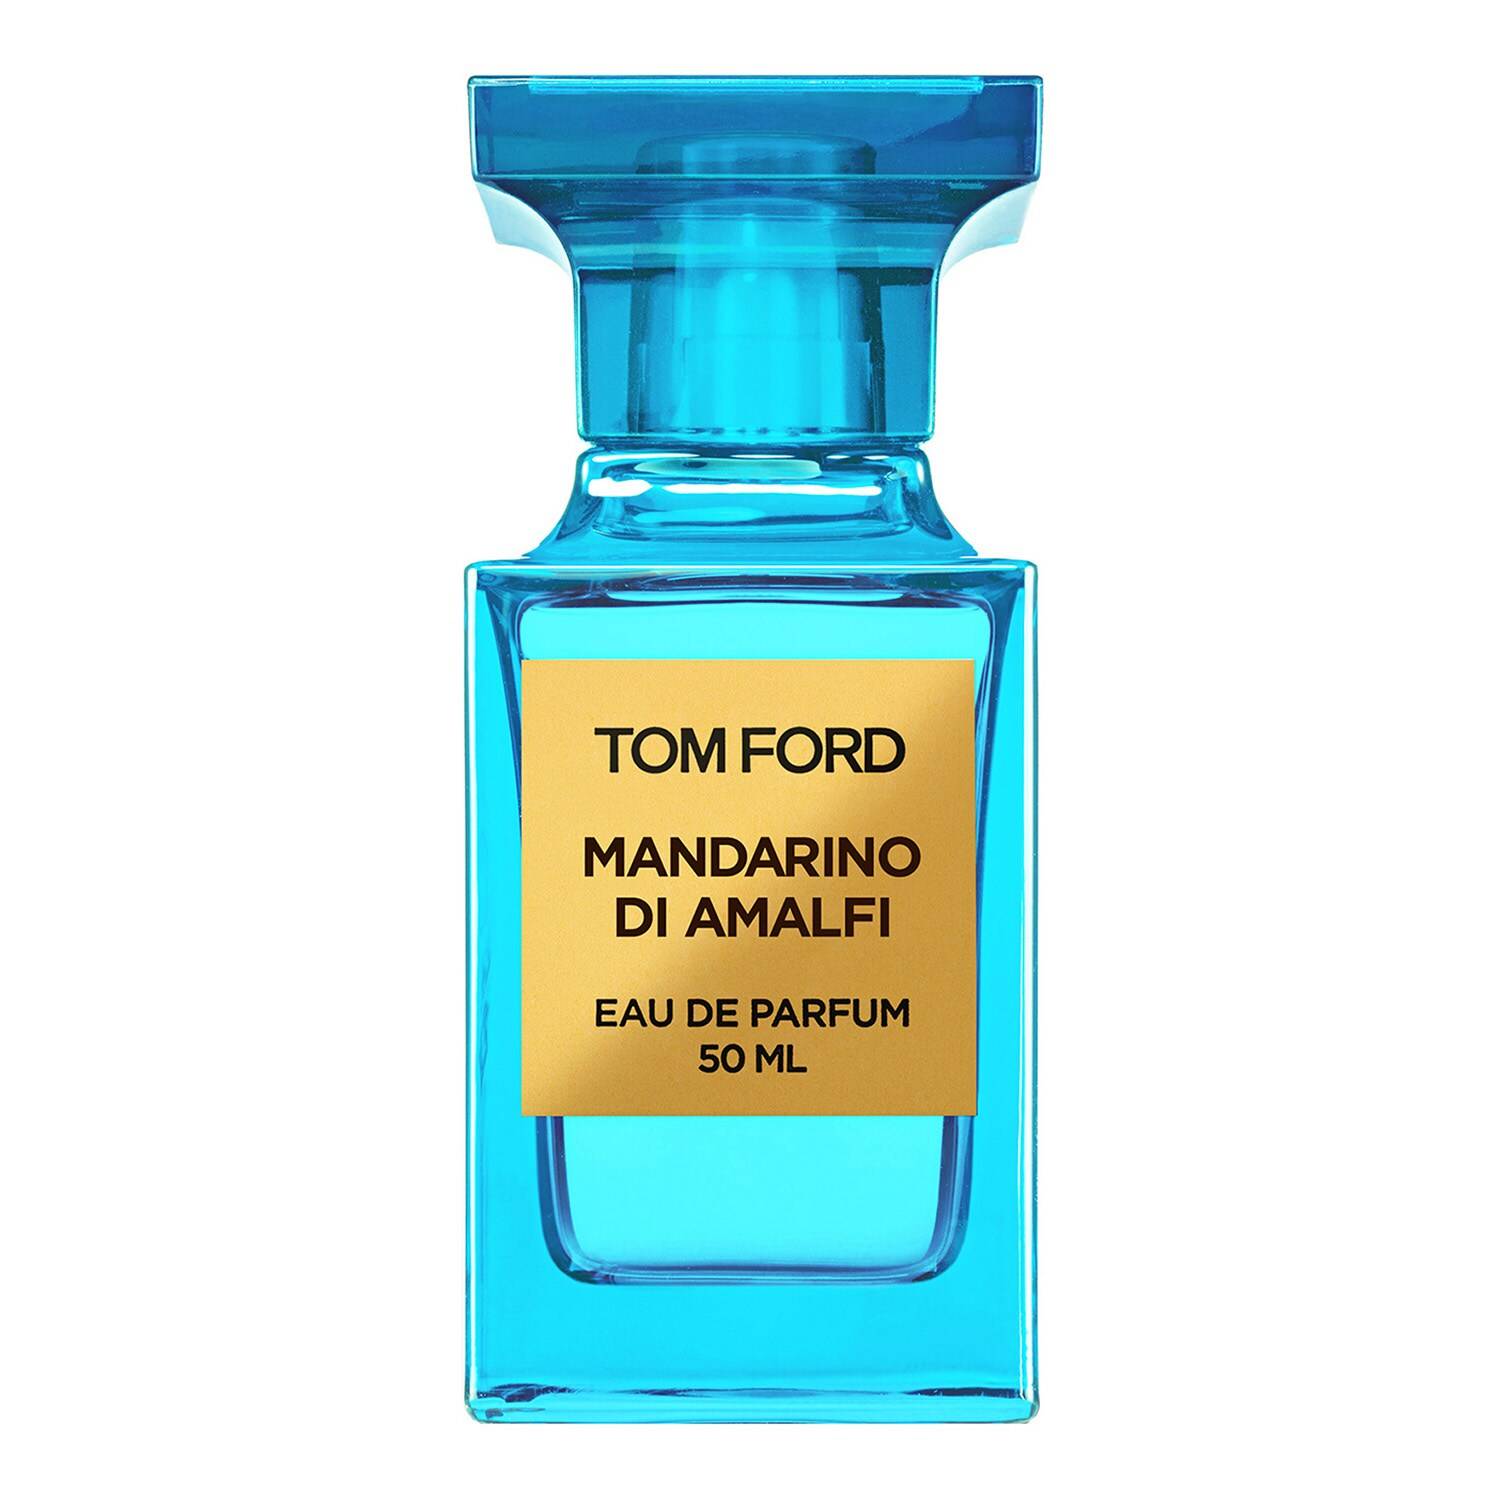 Tom Ford Mandarino Di Amalfi Eau De Parfum 50Ml